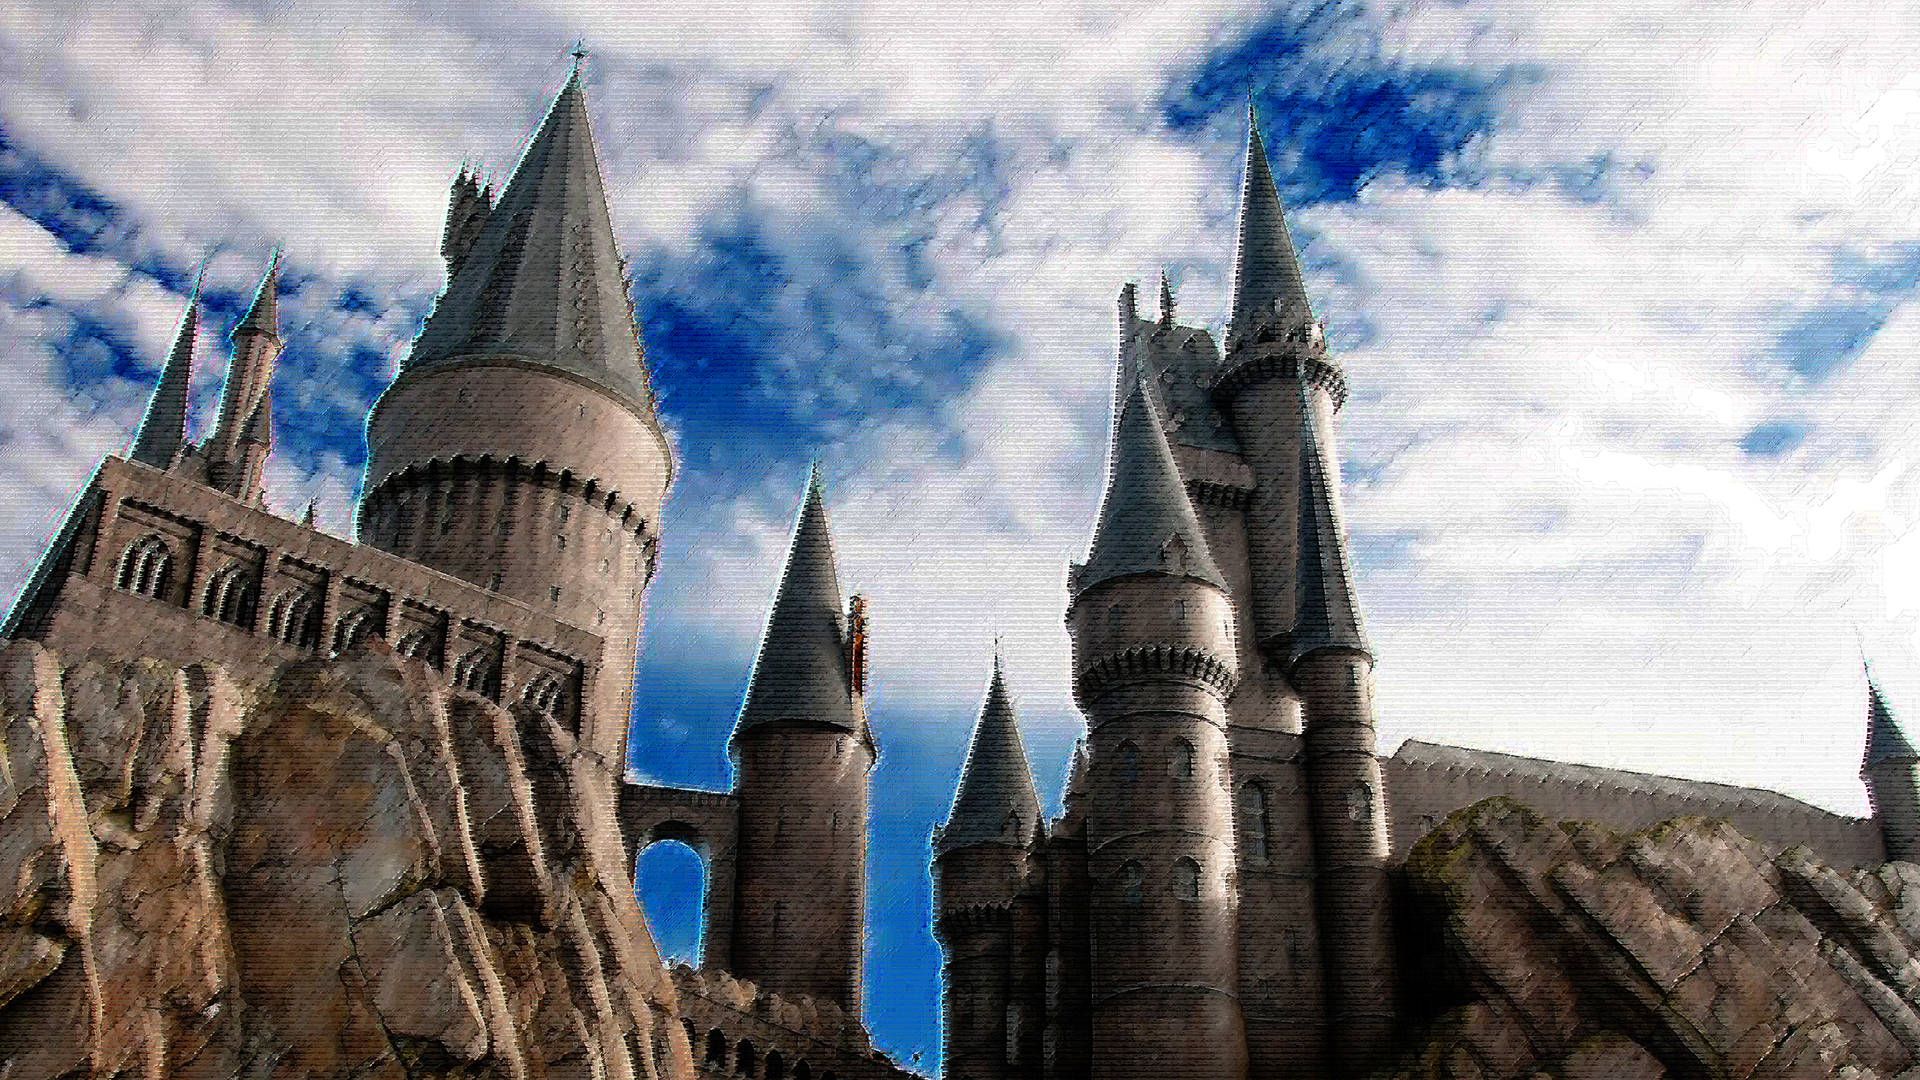 Harry potter castle in the clouds - Castle